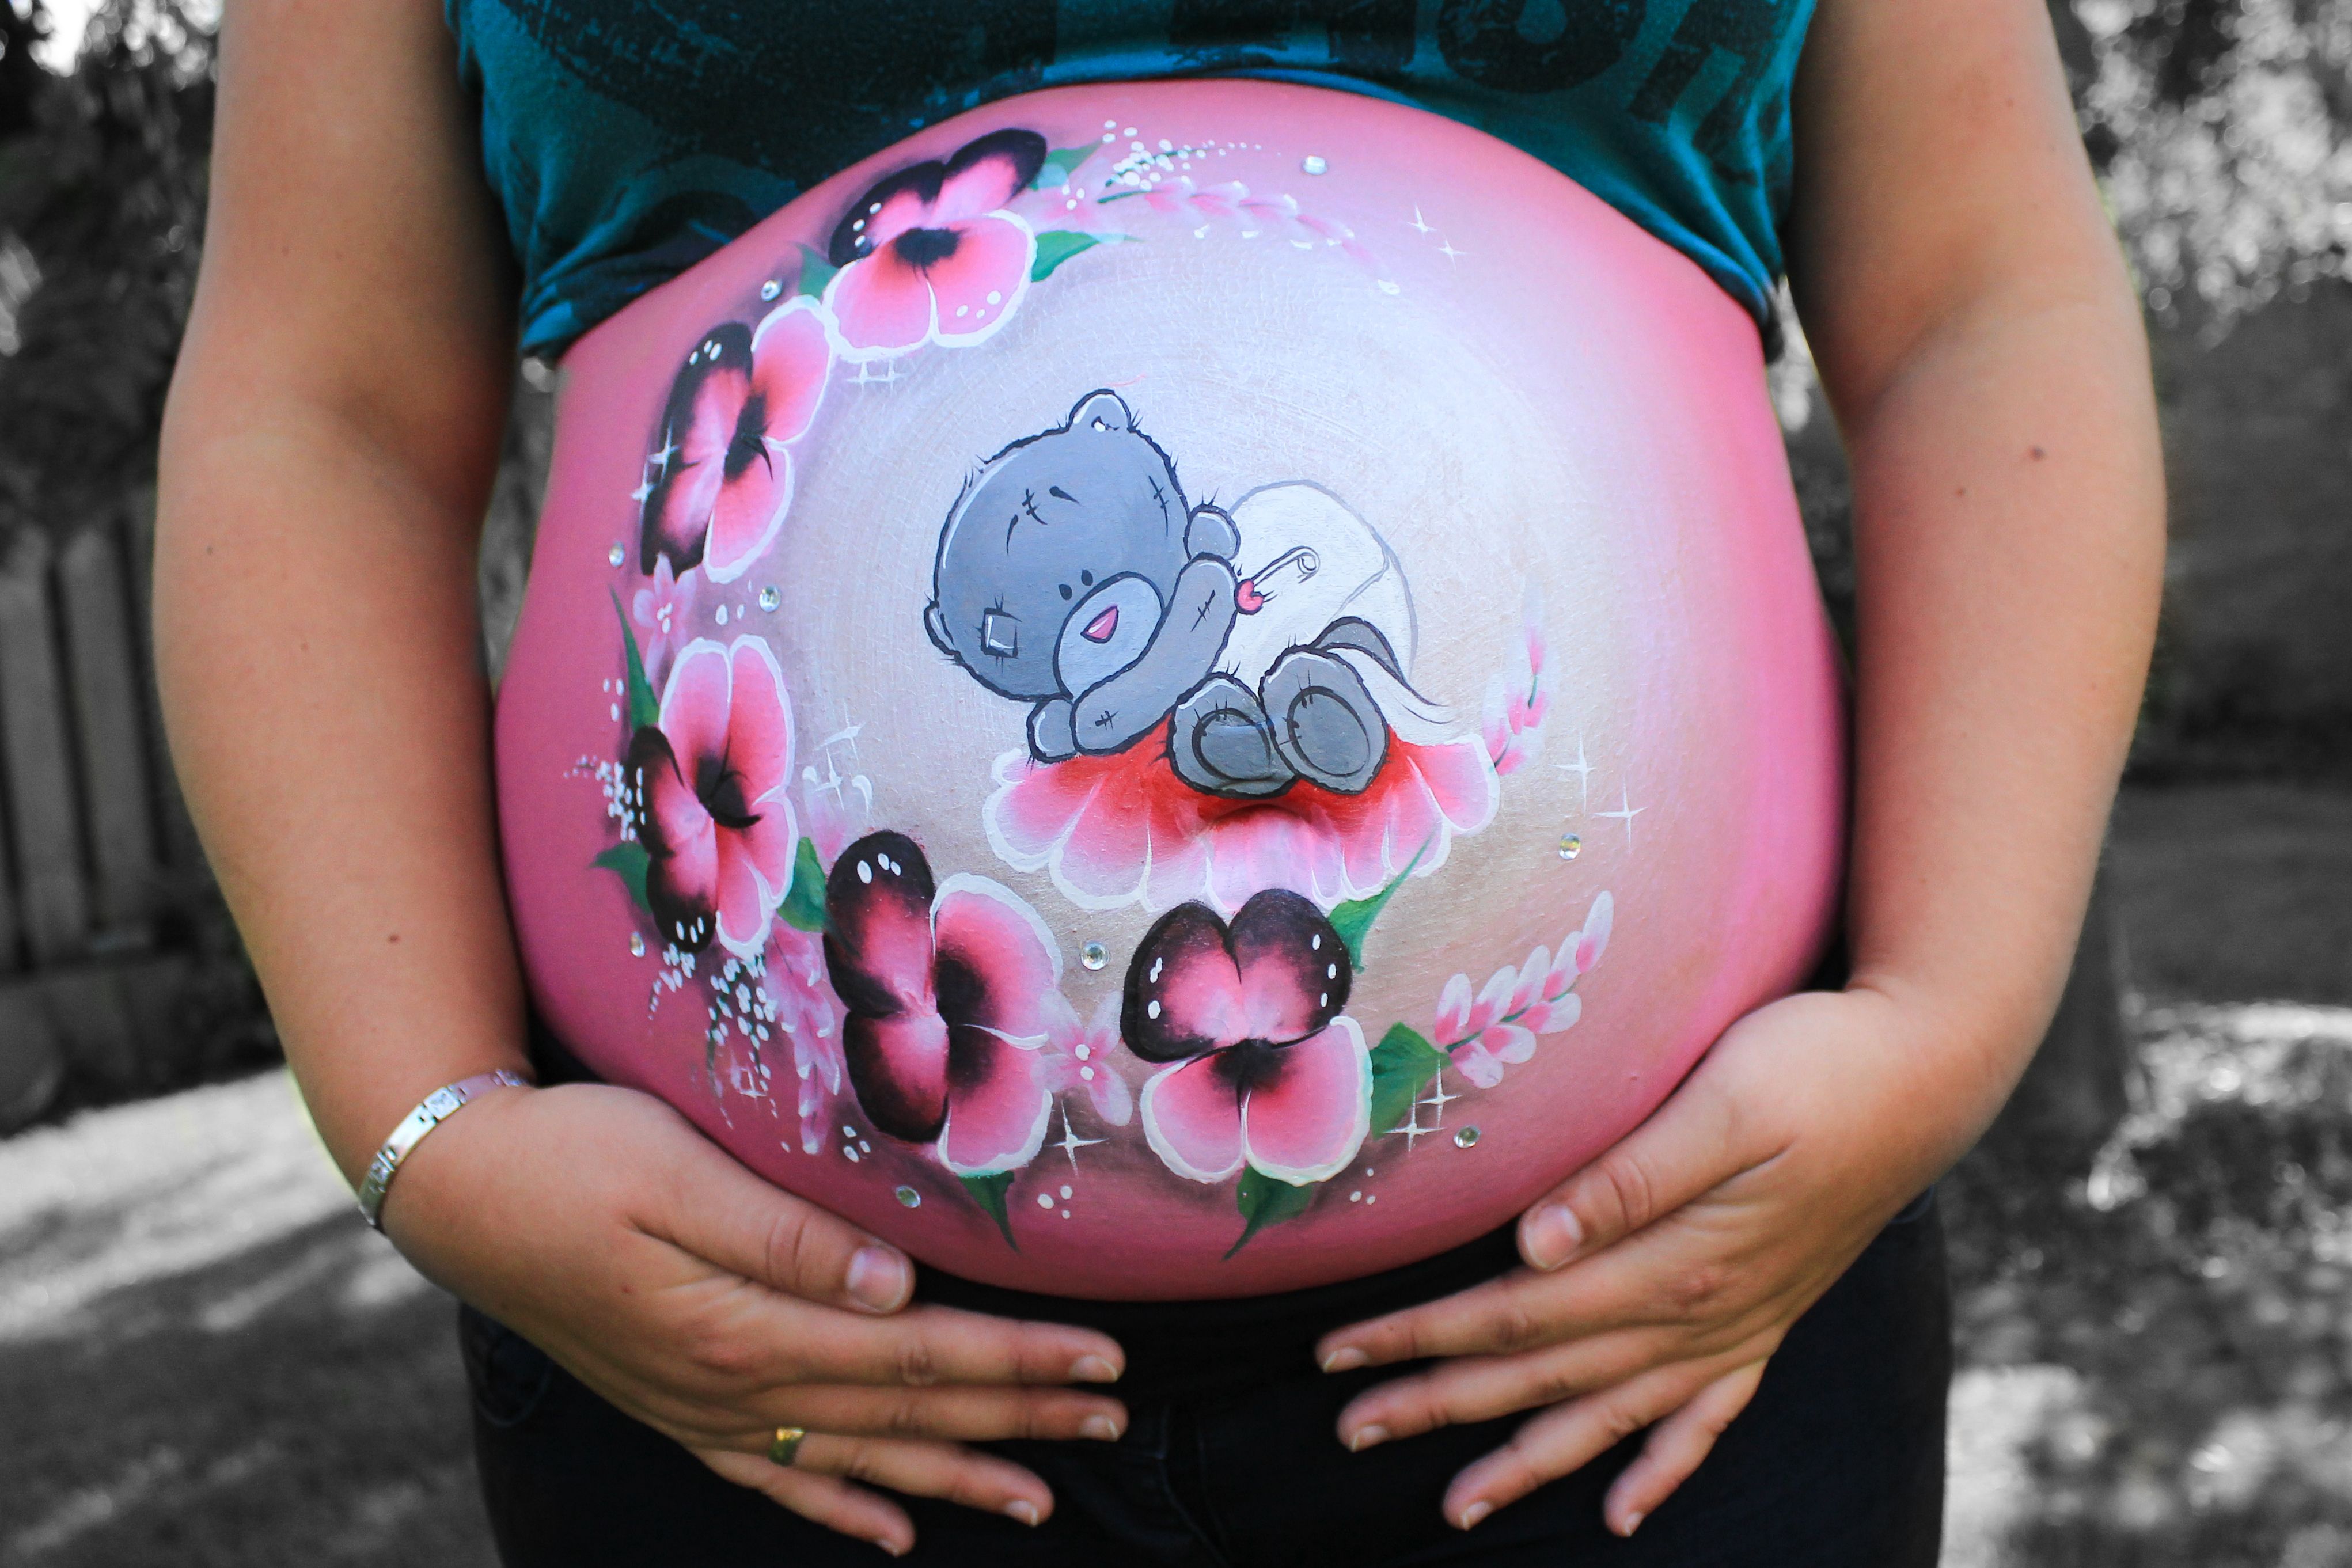 Рисунки на животе у беременных